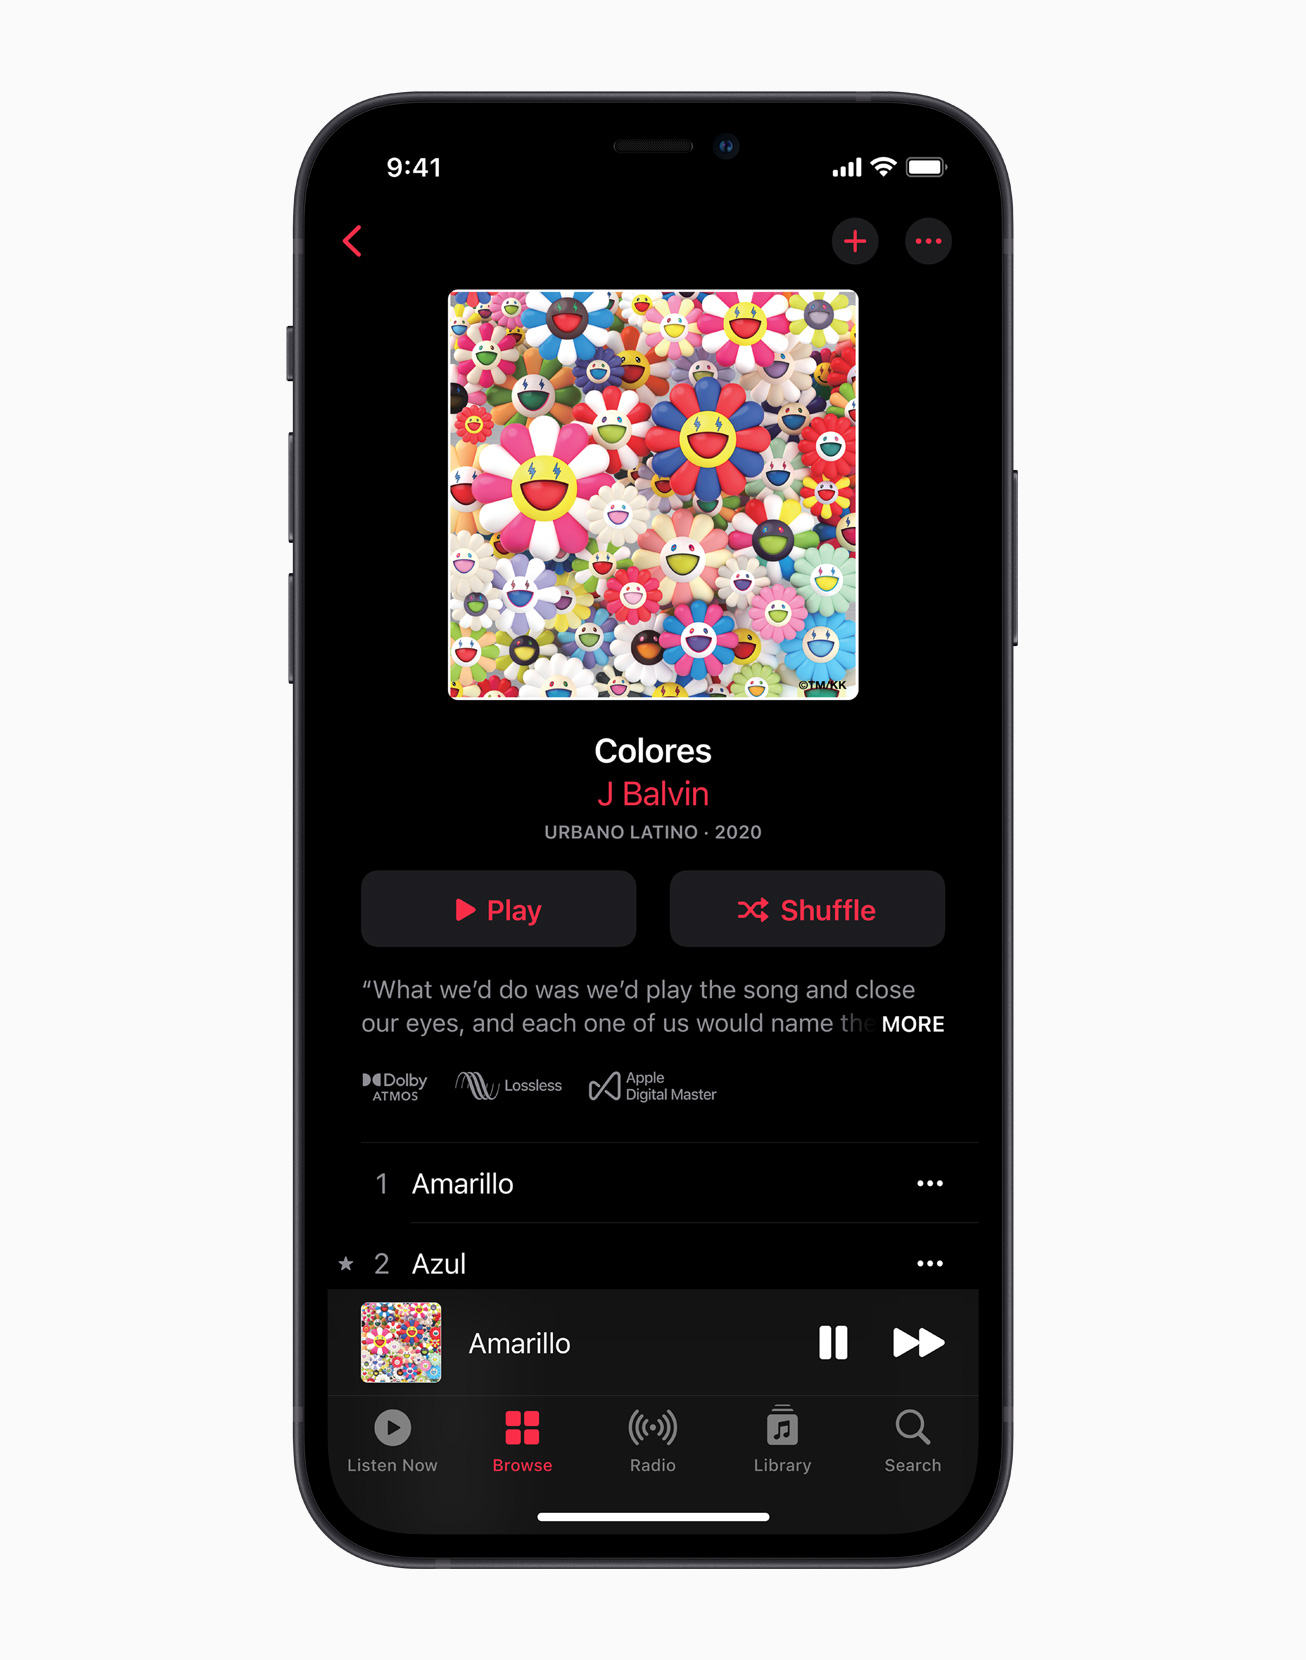 A lossless album on Apple Music